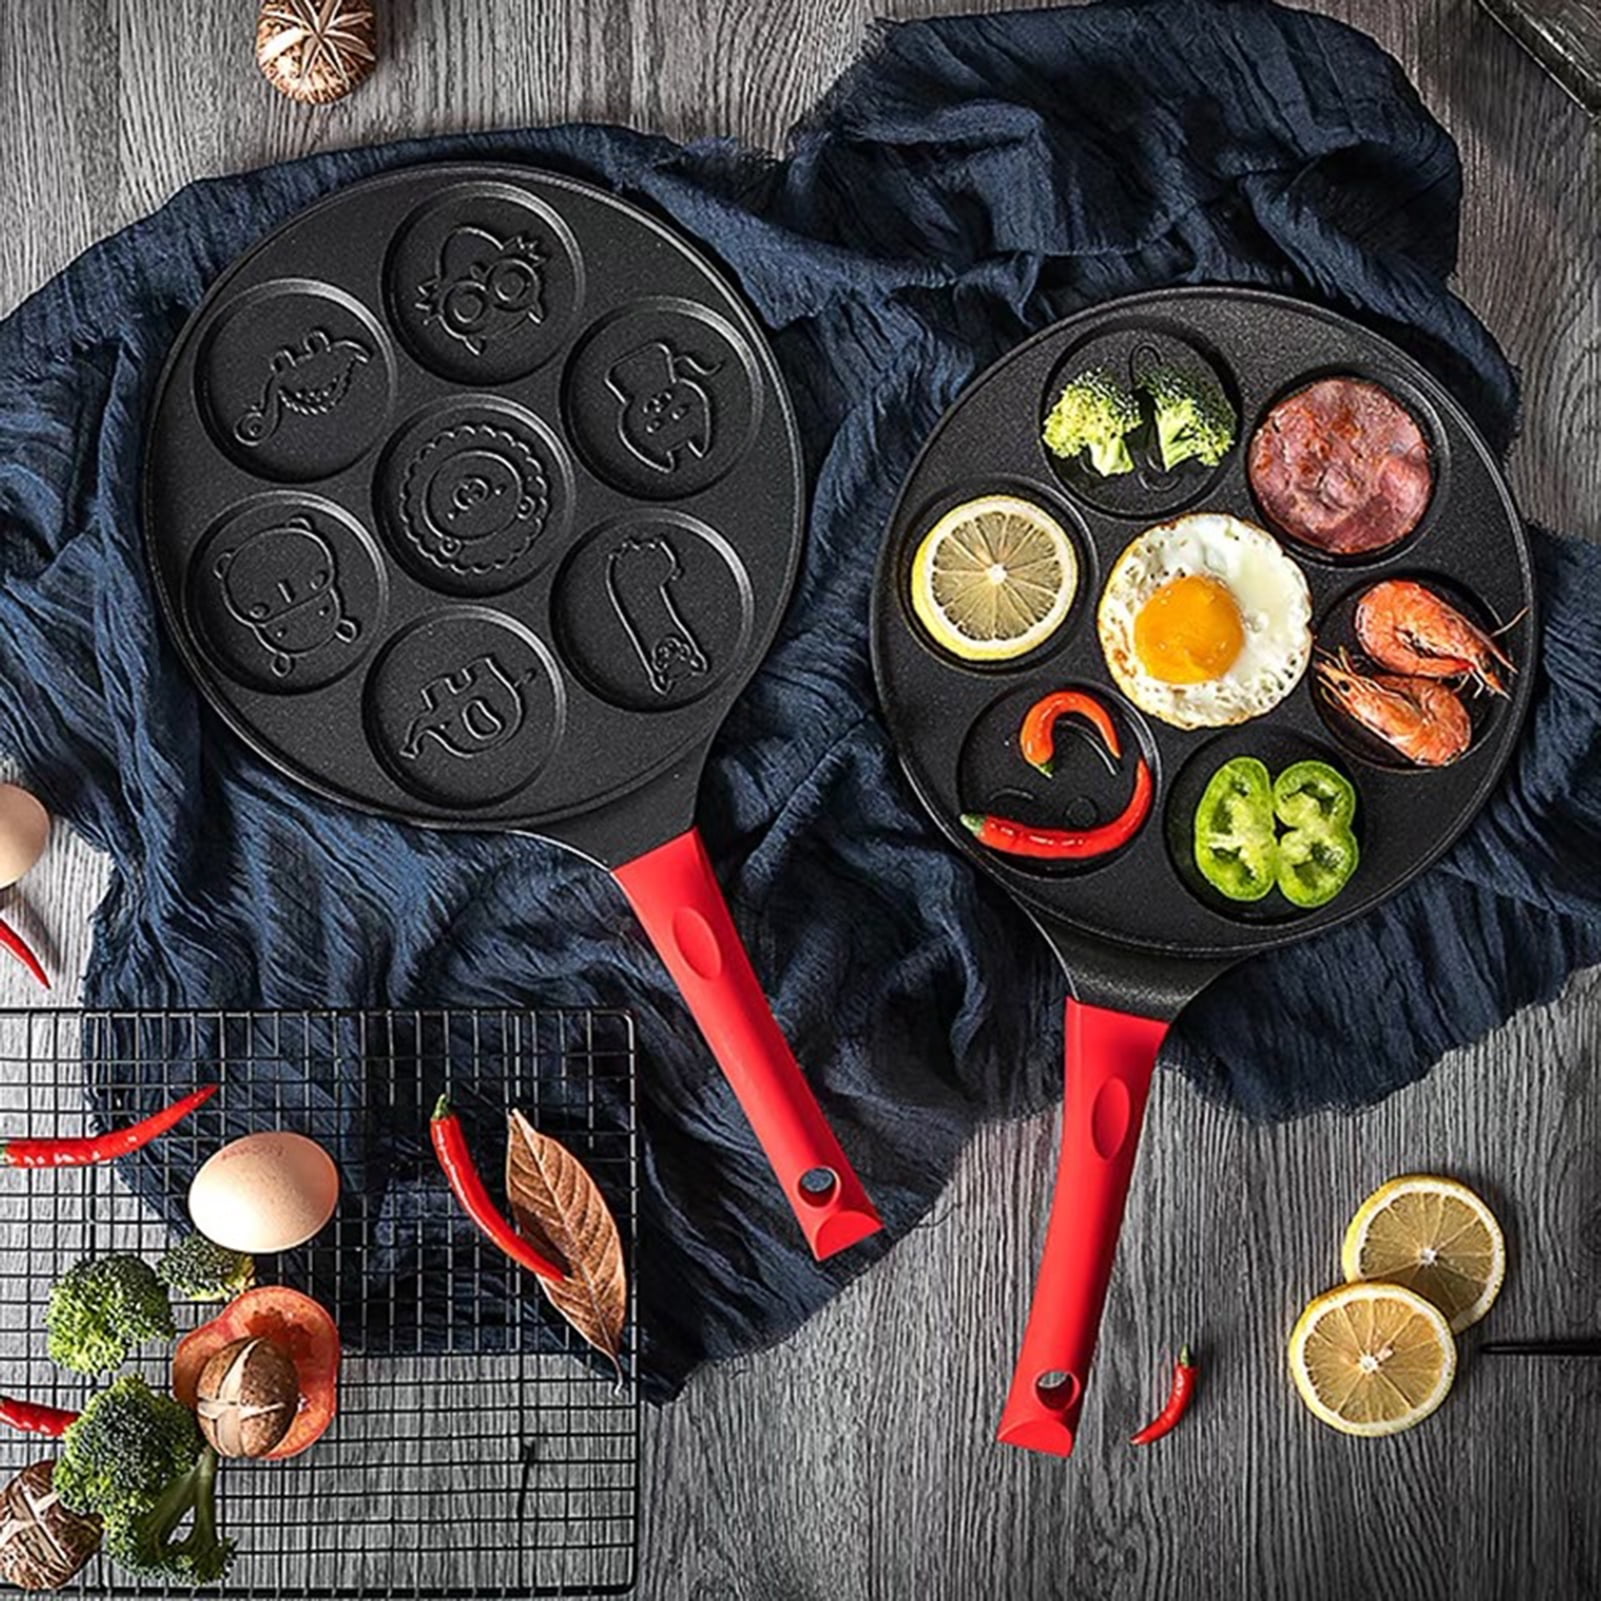 Pancake Pan with Handle 7 Animal Molds Pancake Maker Pan for Kids€